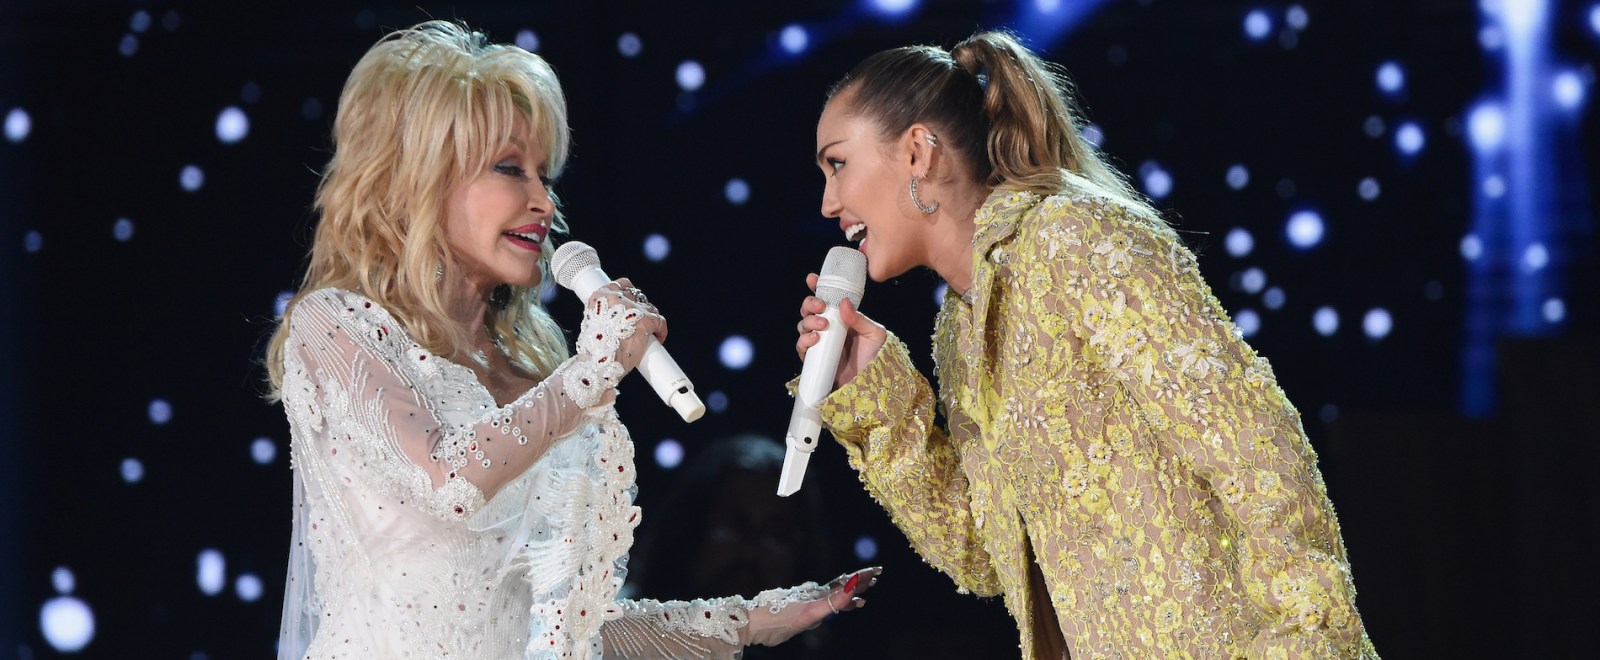 Dolly Parton Miley Cyrus 61st Annual Grammy Awards 2019